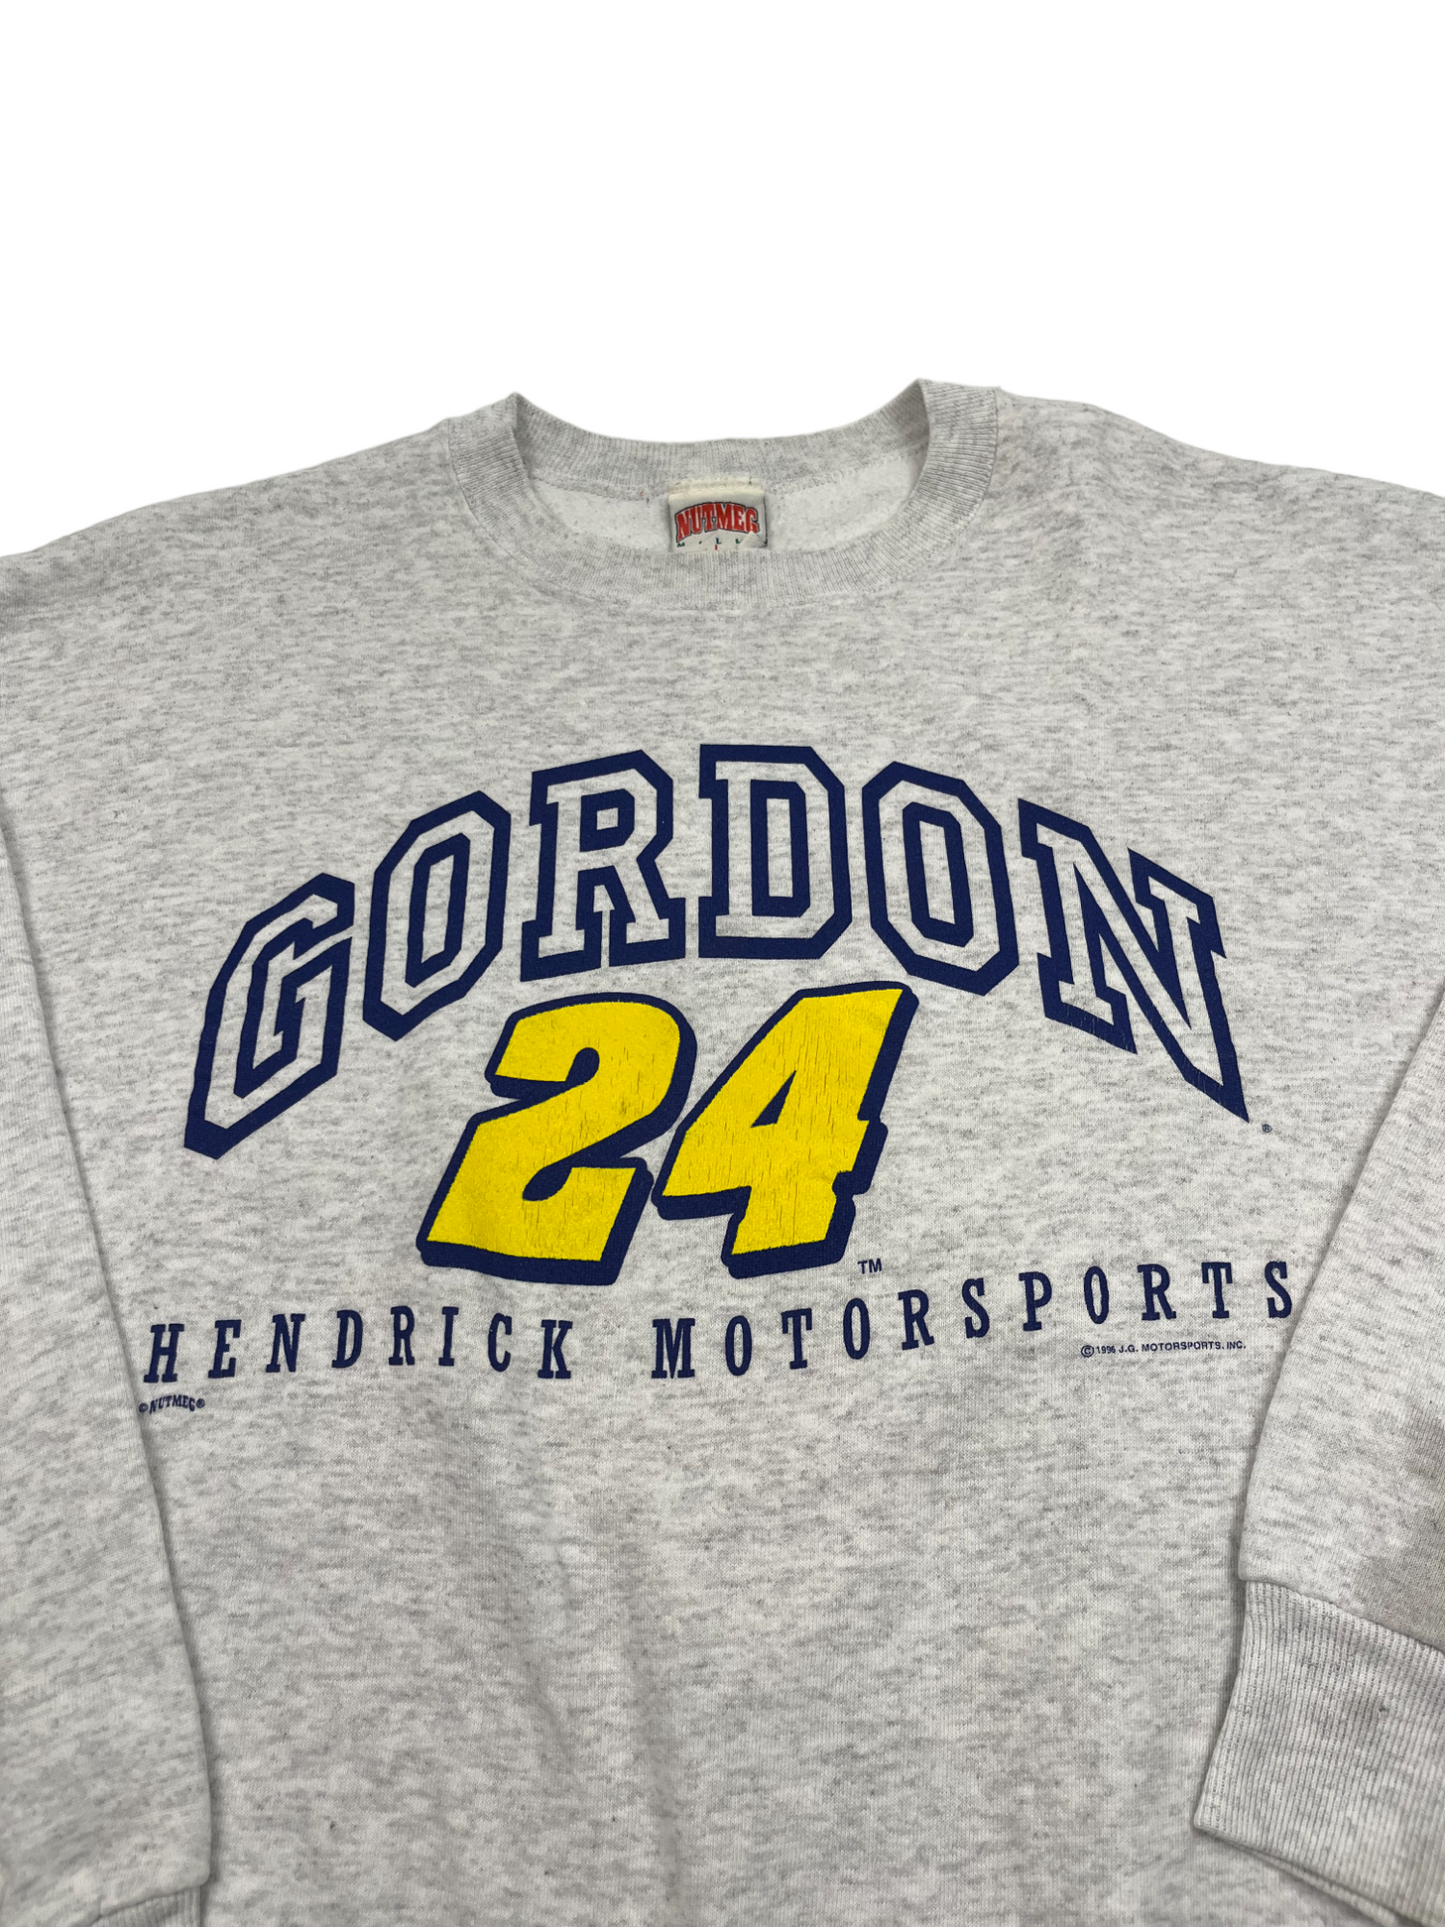 Gordon 24 Hendrick Motosports Crewneck